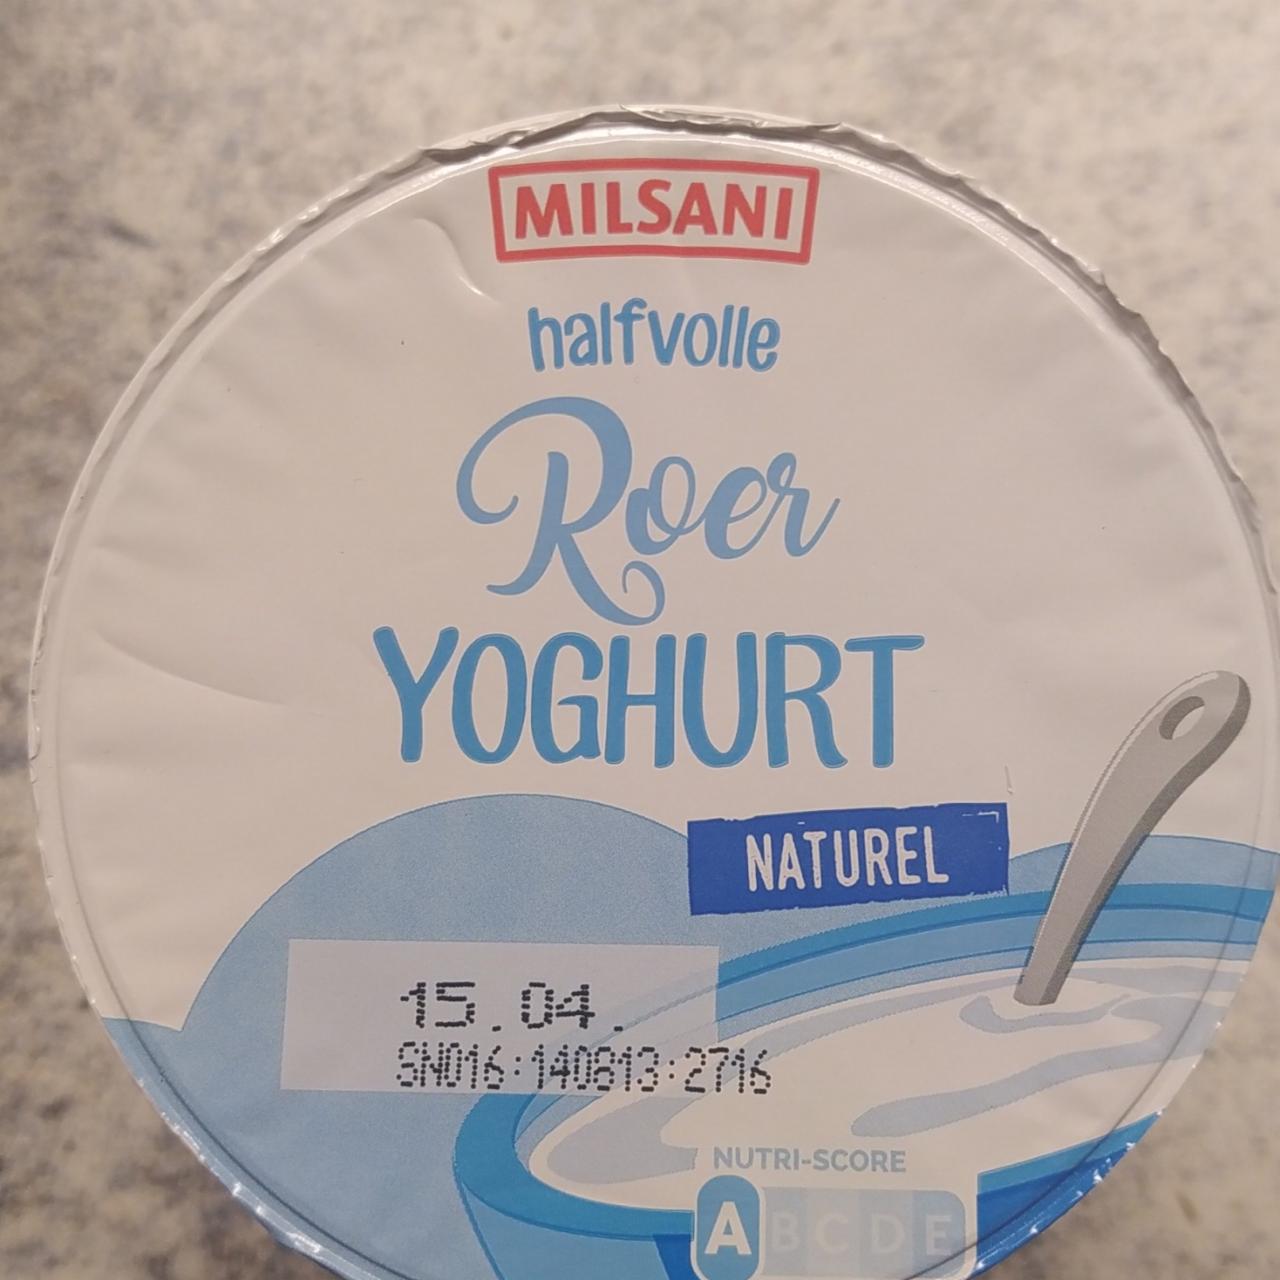 Fotografie - Halfvolle Roer Yoghurt Naturel Milsani